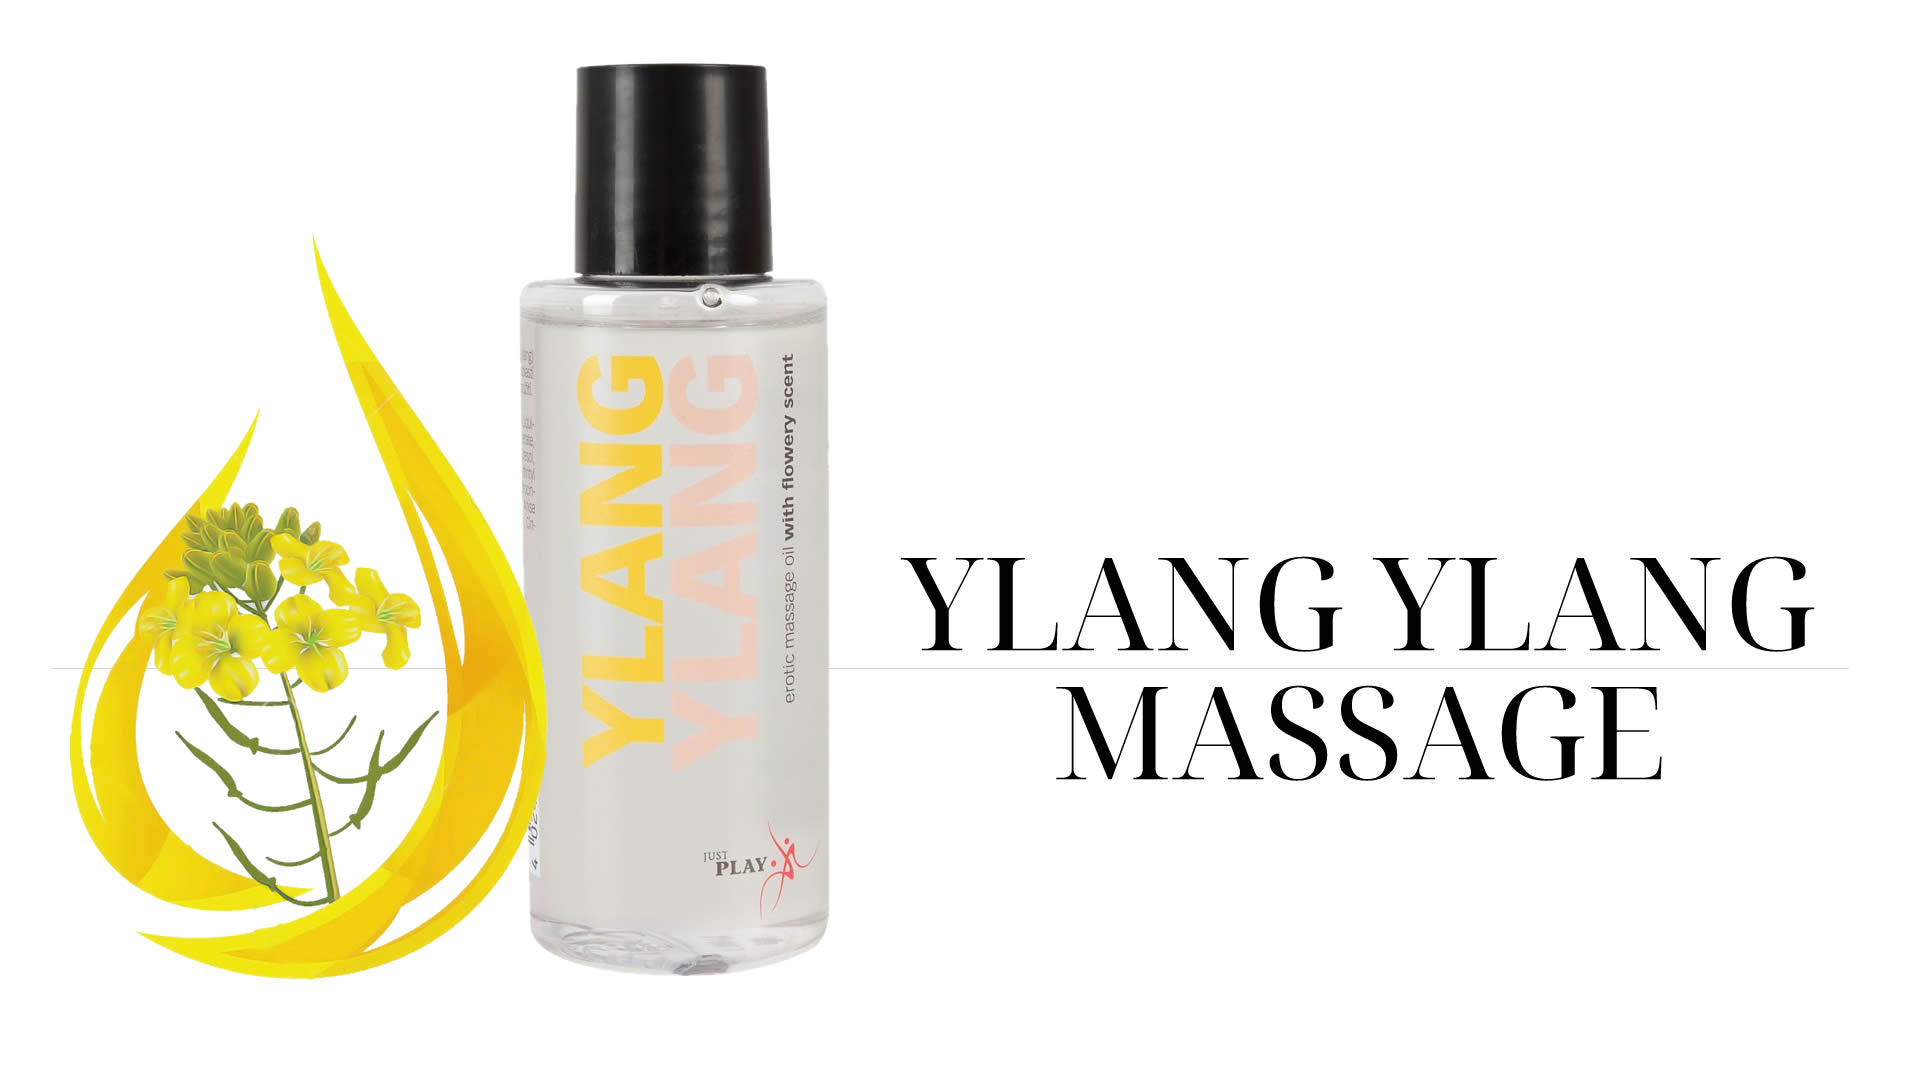 Just Play Massage Oil with Ylang Ylang